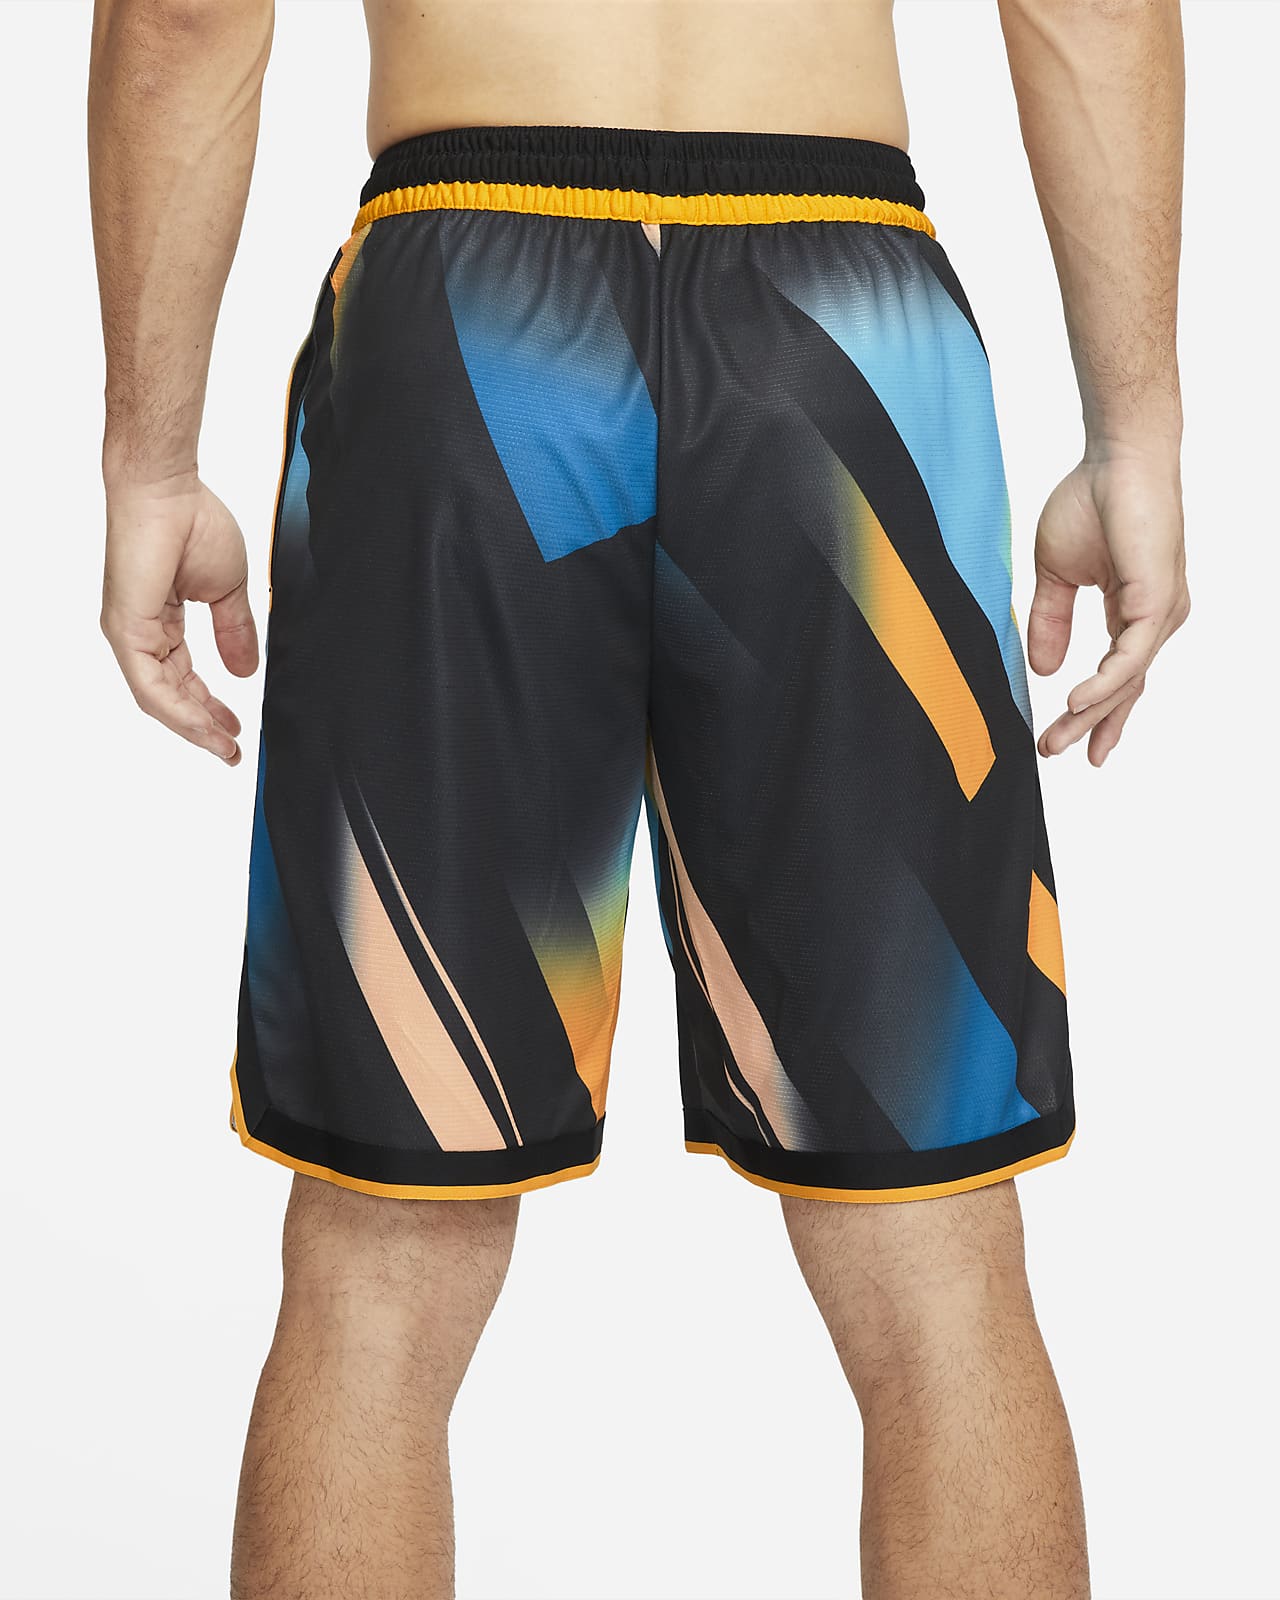 Mens Shorts Basketball Football Gym Training Beach Athletic Dri-fit with Pockets 